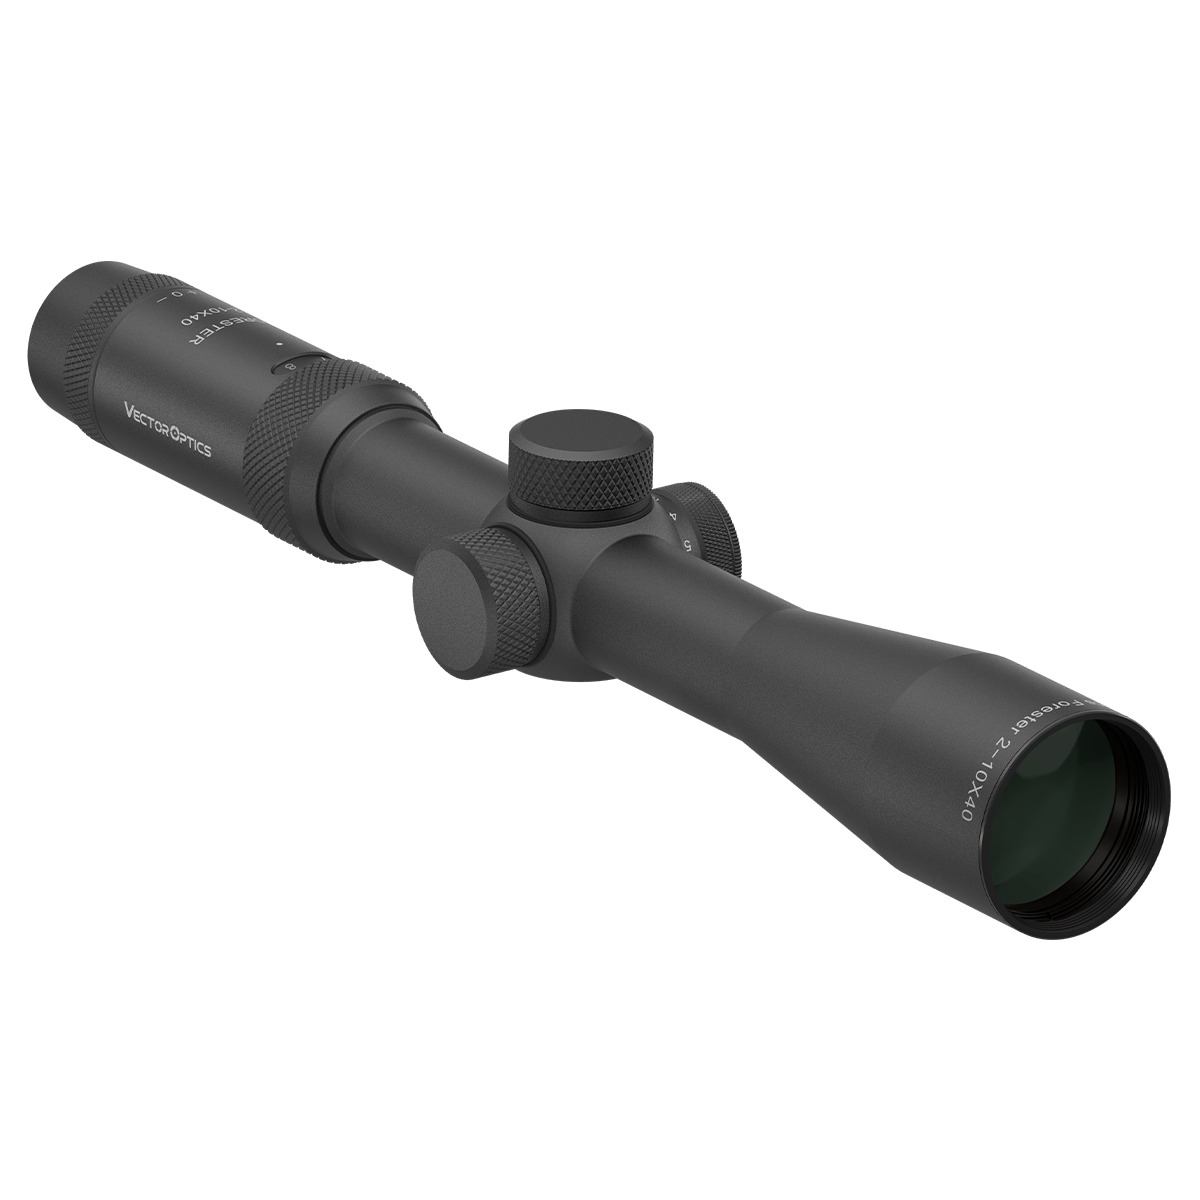 Forester 2-10x40SFP Riflescope